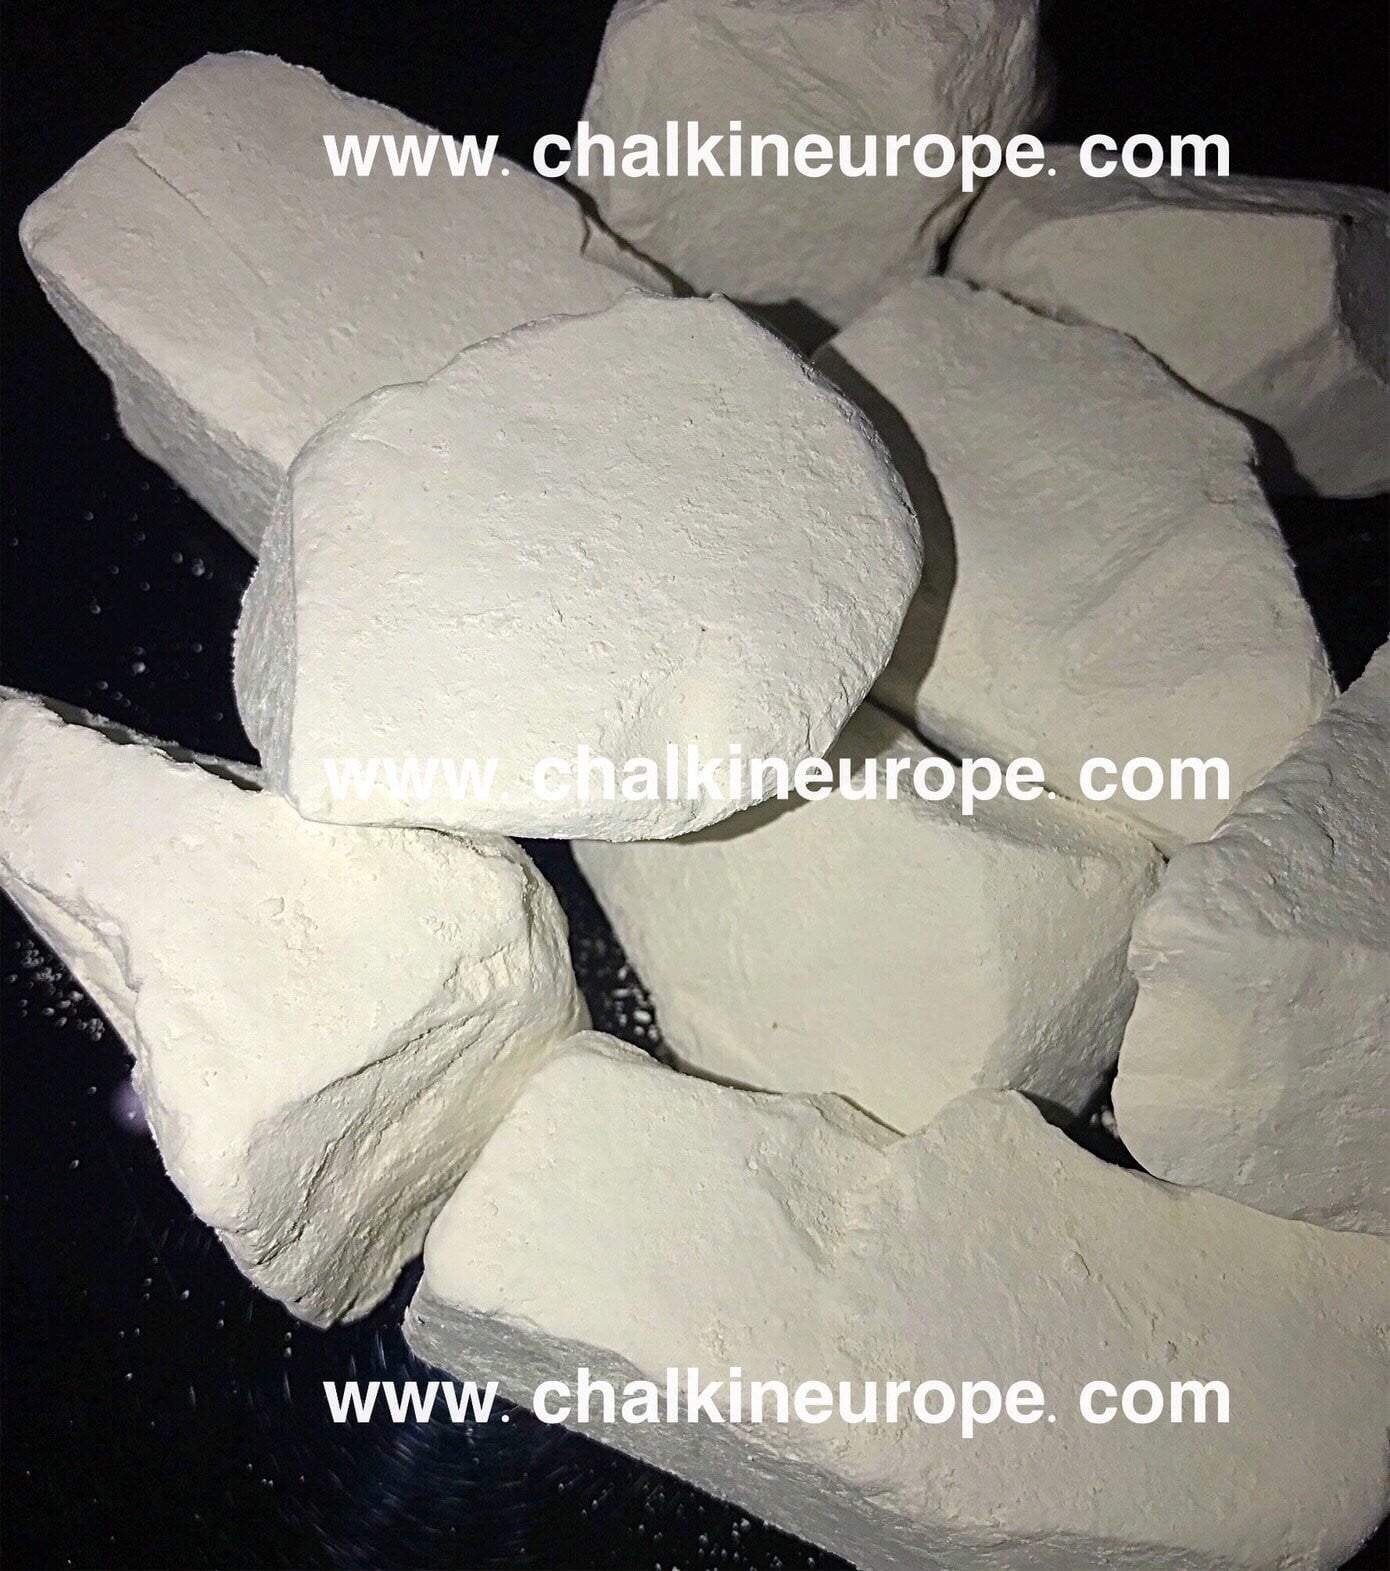 Edible chalk : MIROPOLE edible Chalk chunks (lump) natural for eating (food)